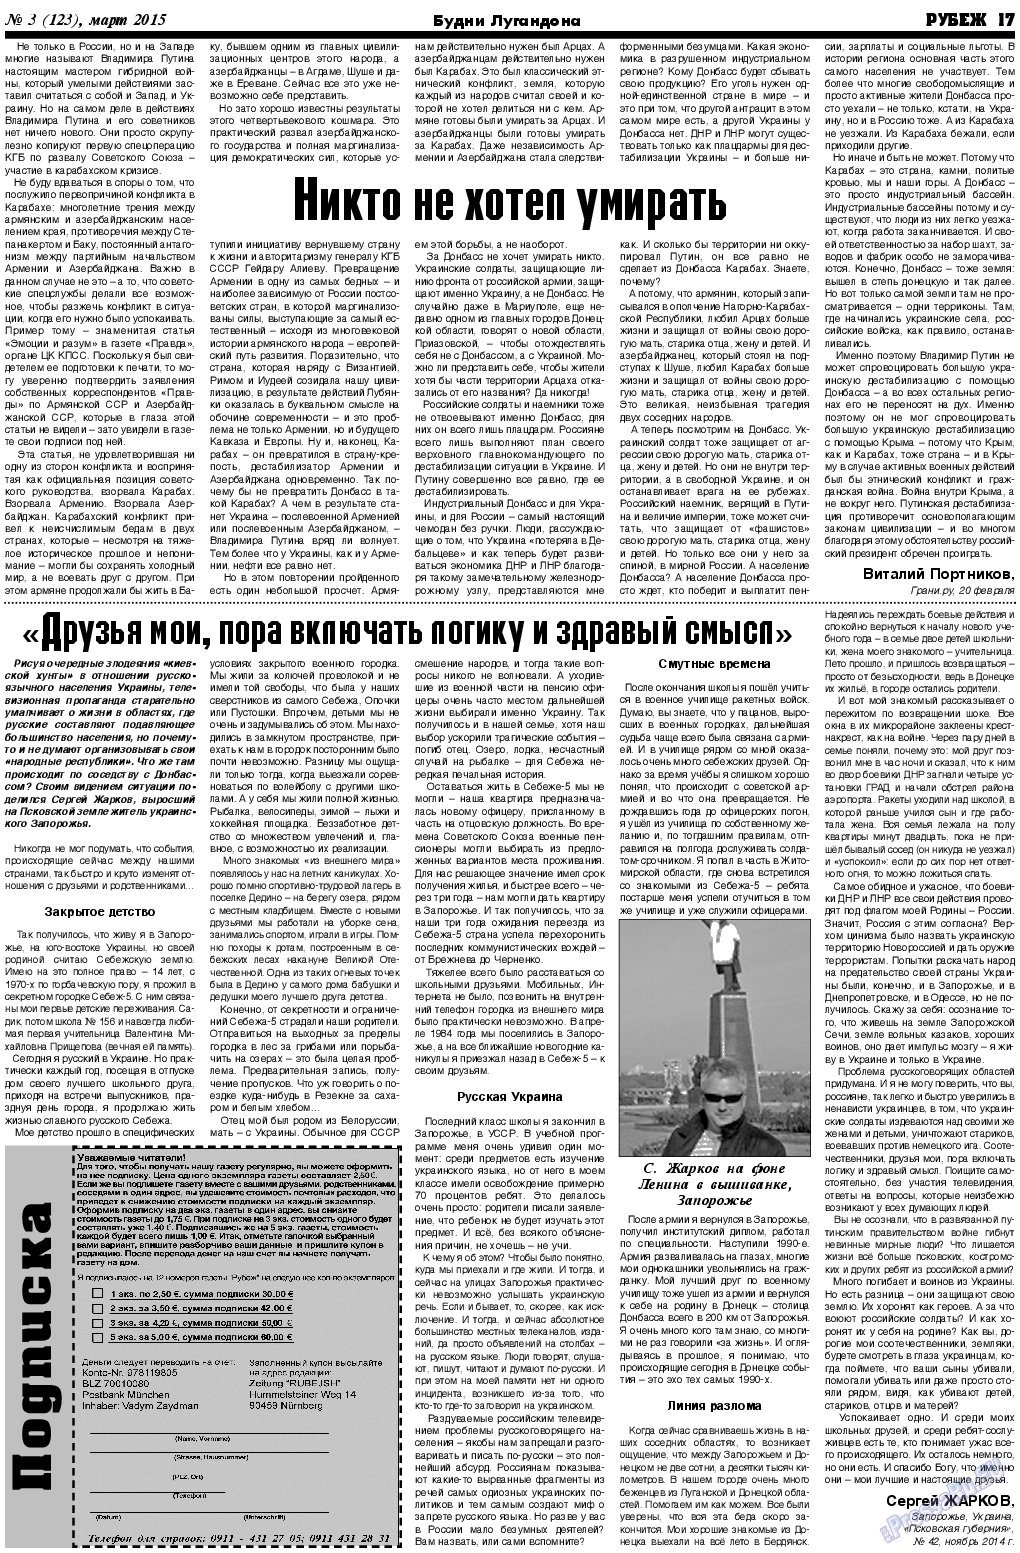 Рубеж, газета. 2015 №3 стр.17